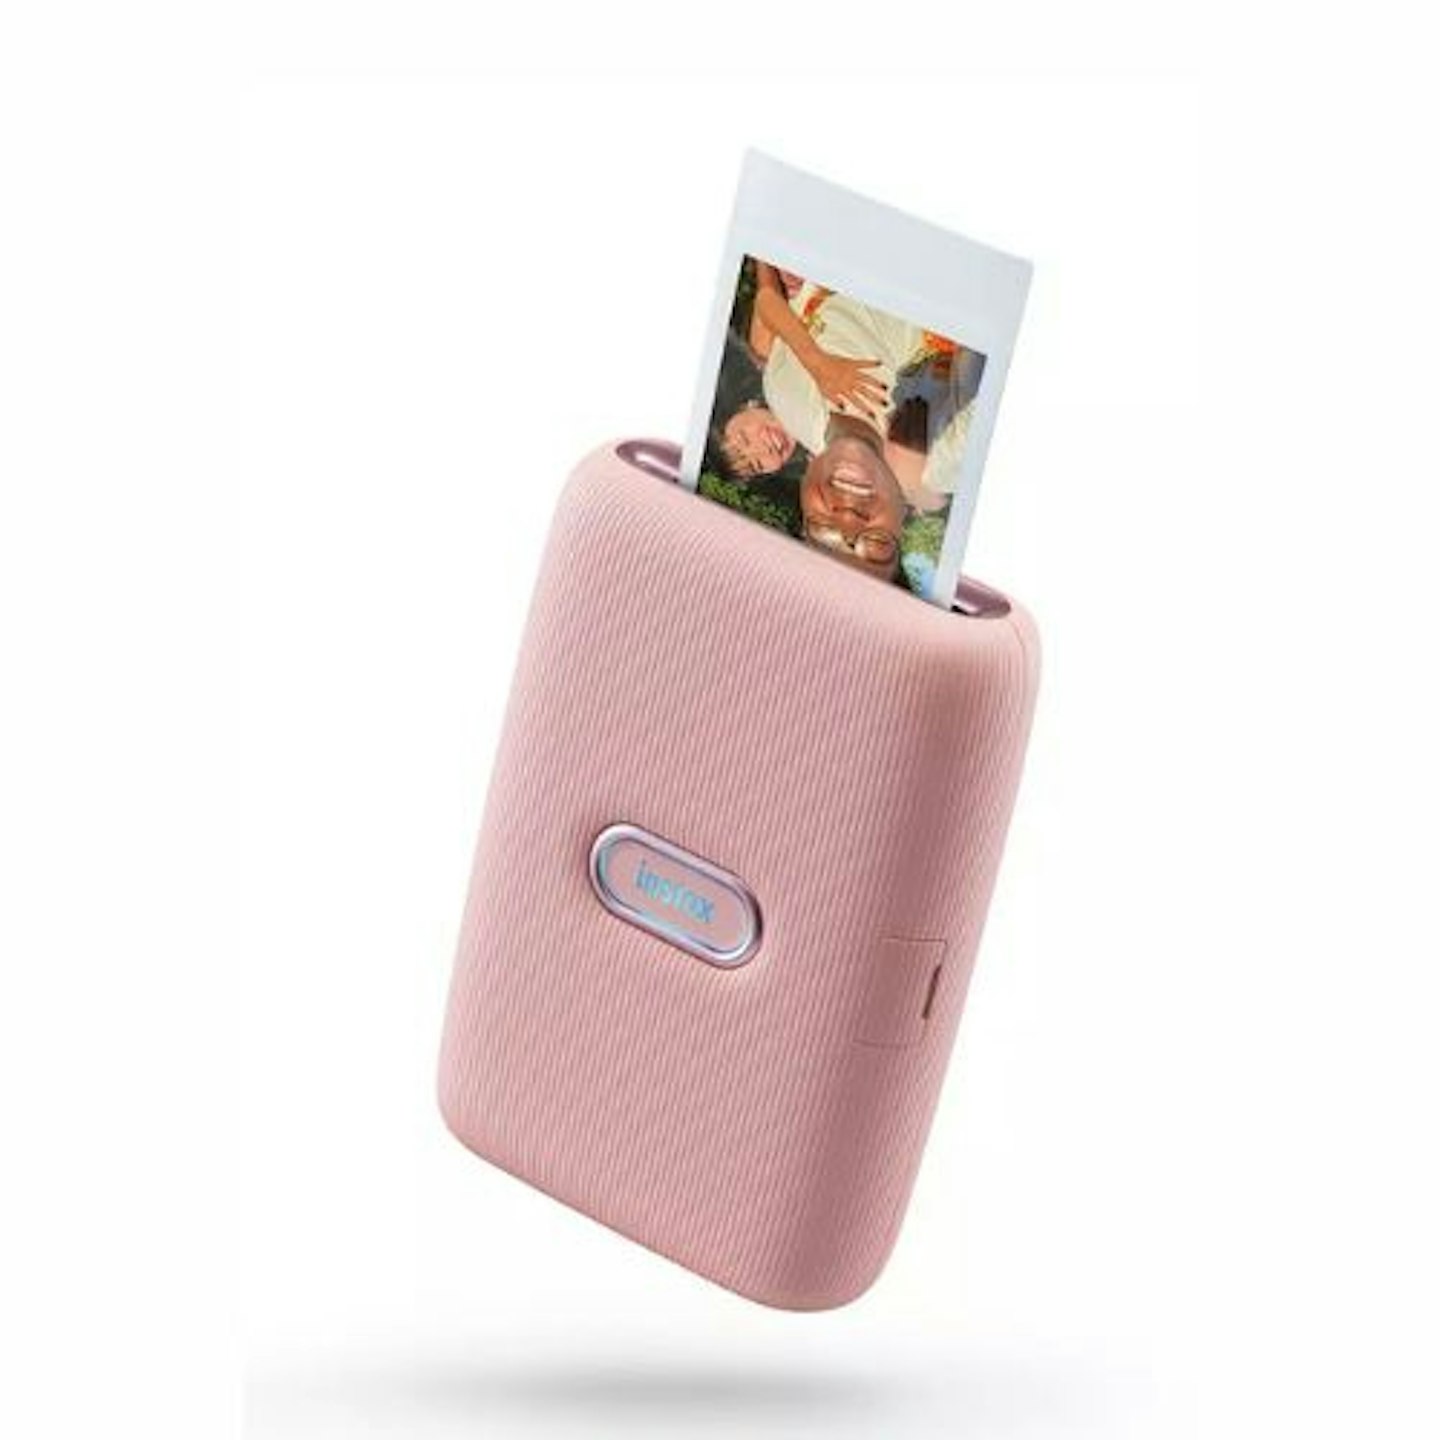 Instax Mini Link Smartphone Printer - Pink